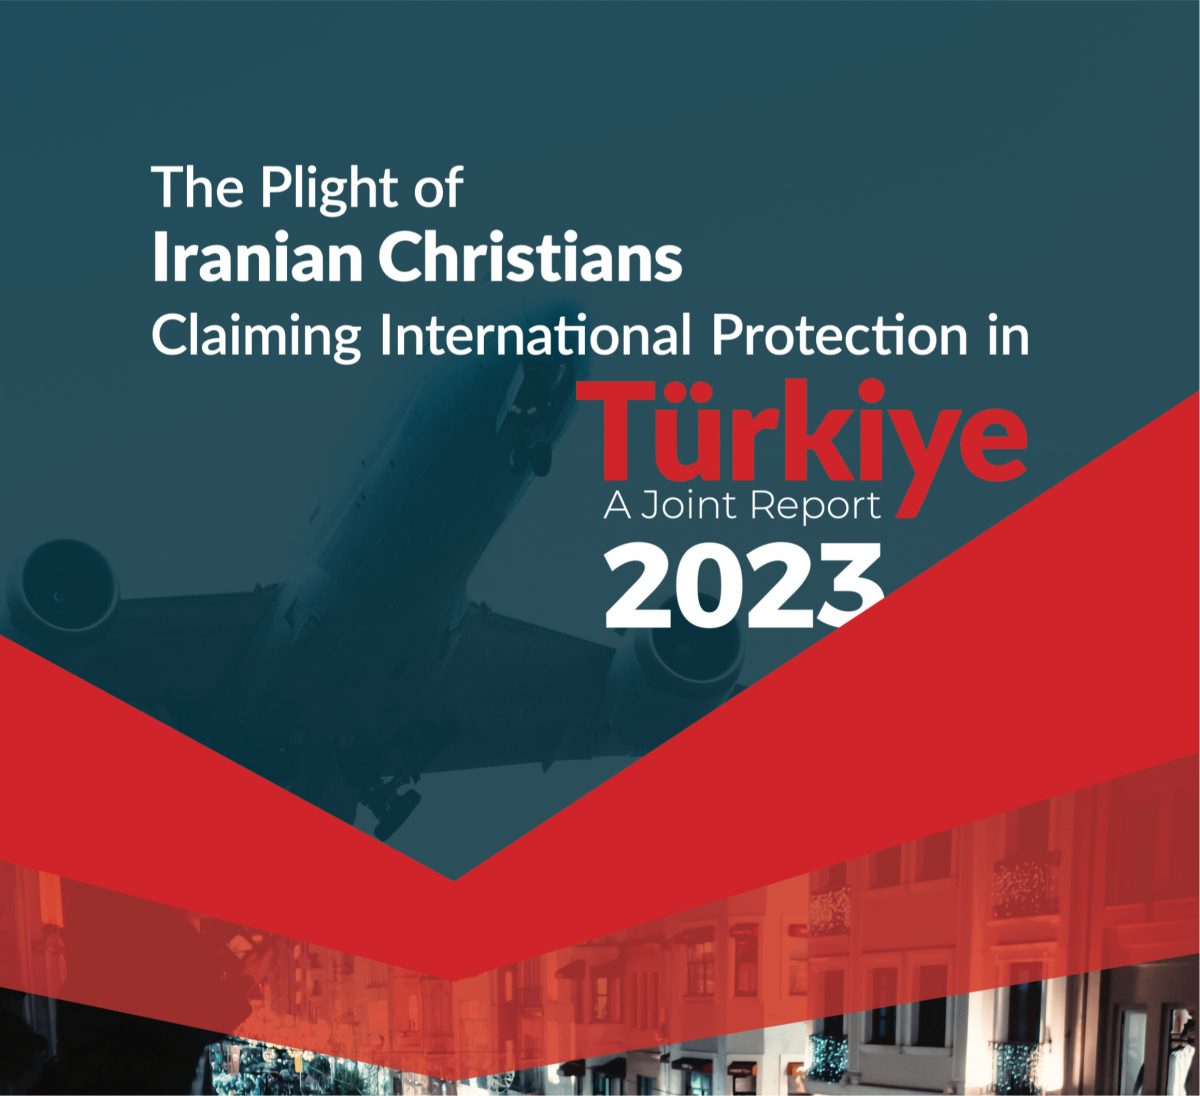 TURKEY: New report highlights plight of Iranian Christian refugees